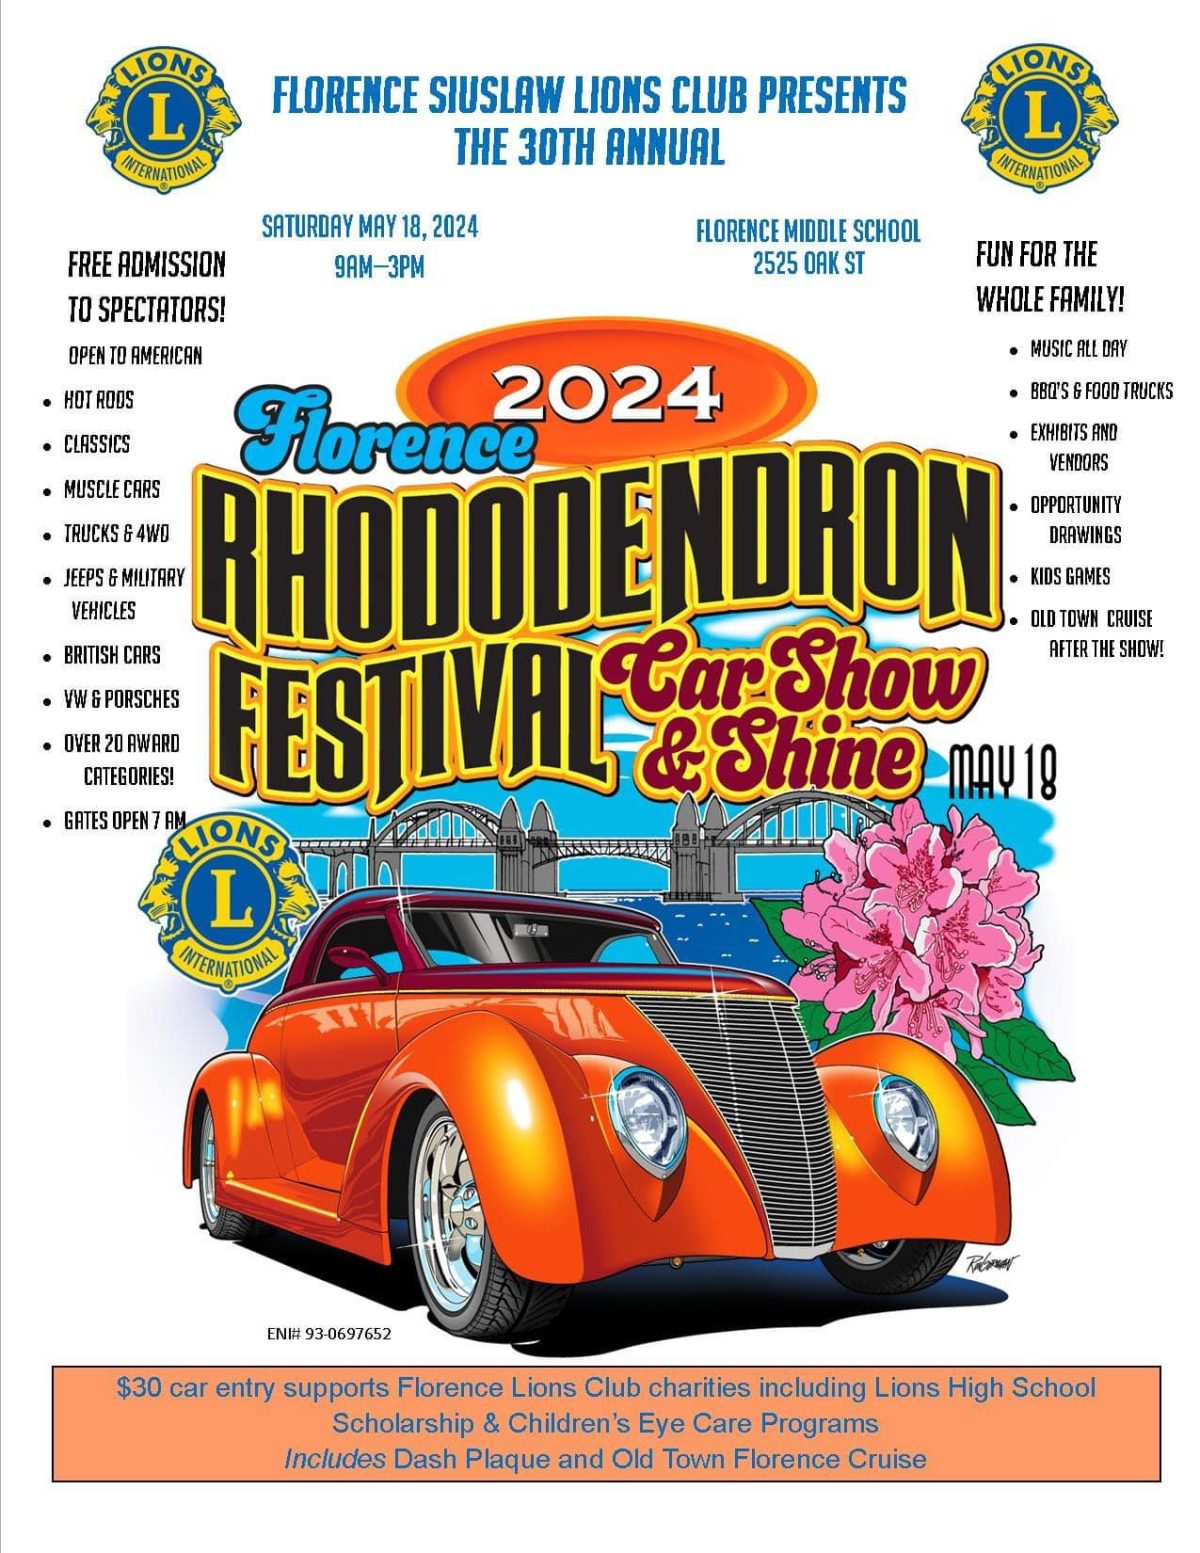 Rhododendron Festival Car Show N’ Shine